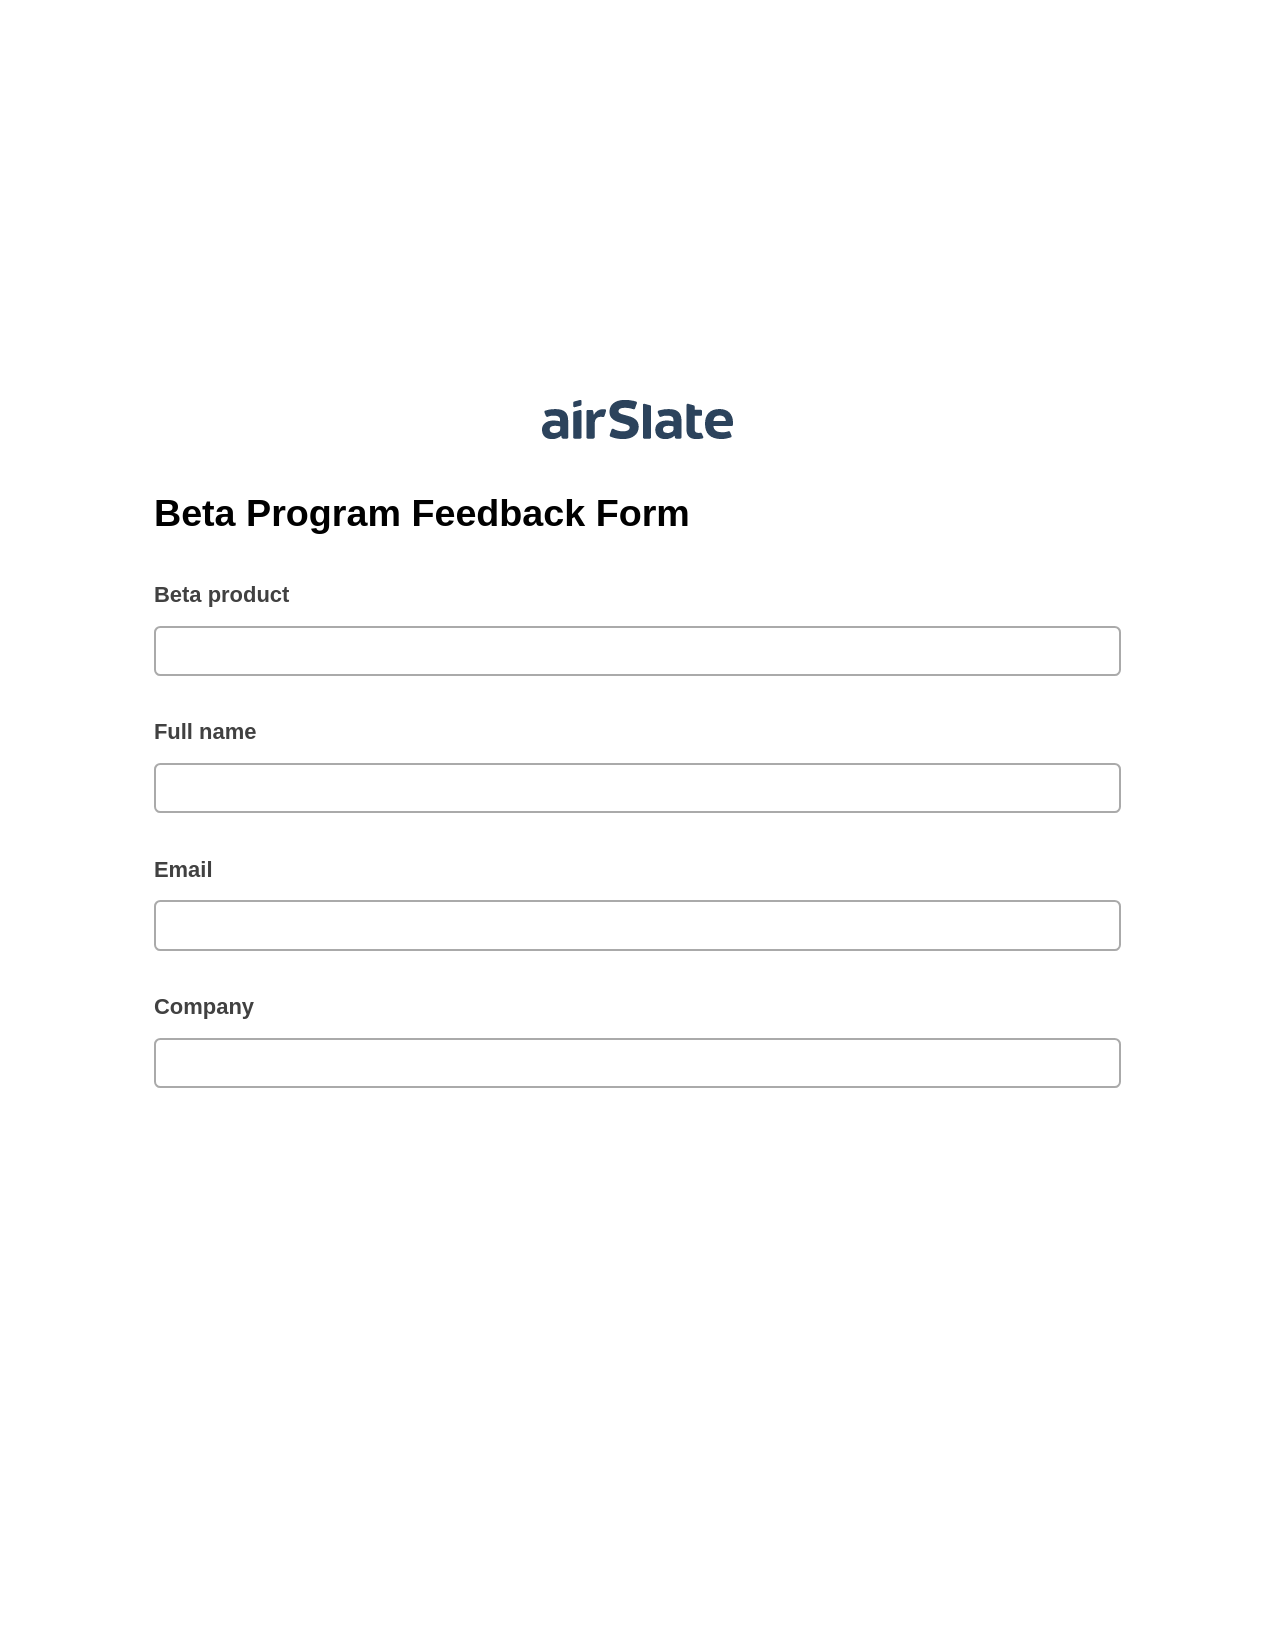 Multirole Beta Program Feedback Form Pre-fill Slate from MS Dynamics 365 Records Bot, Slack Notification Bot, OneDrive Bot